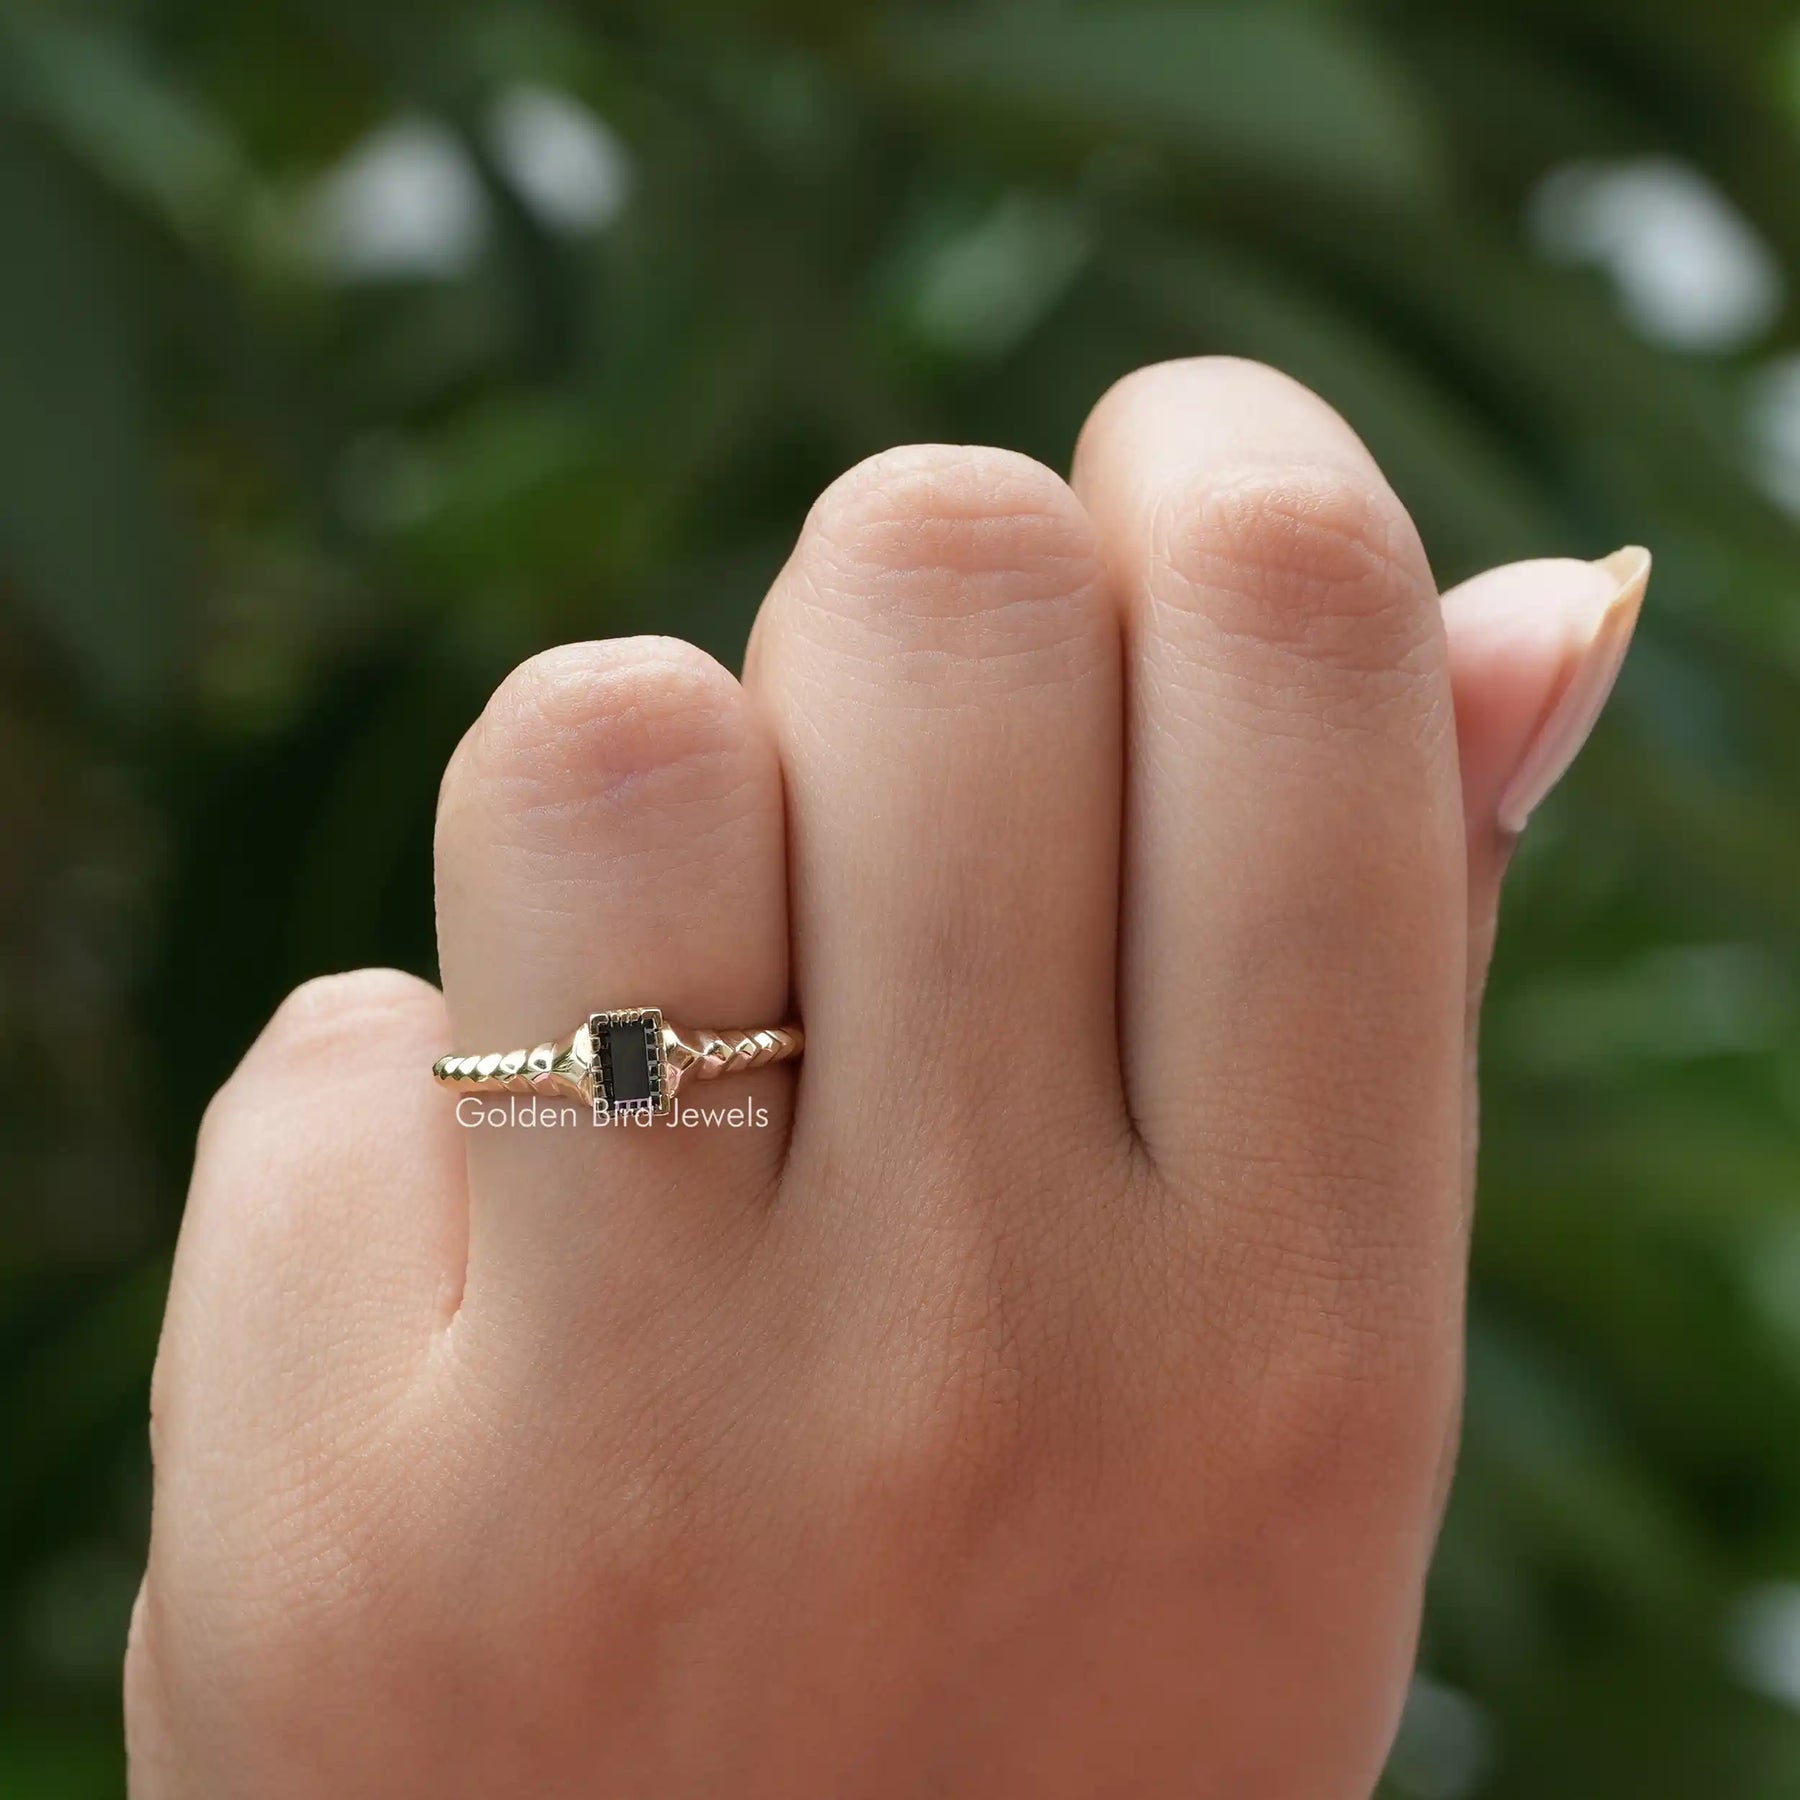 [Solitaire Moissanite Baguette Cut Engagement Ring]-[Golden Bird Jewels]